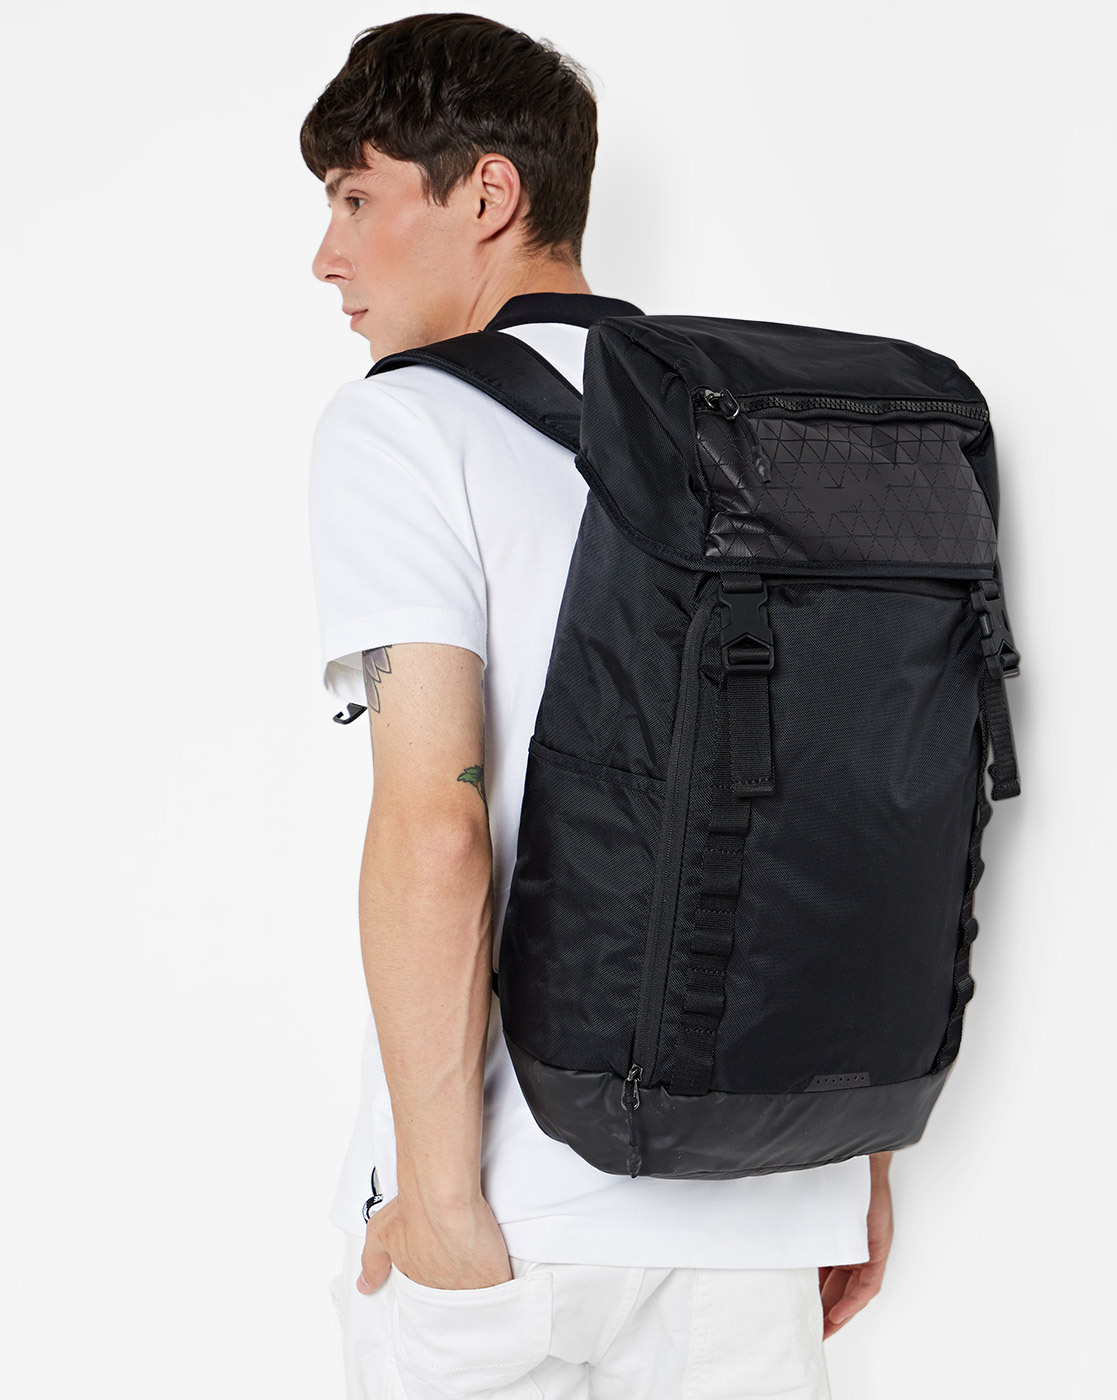 Buy Black Backpacks for Men by NIKE 